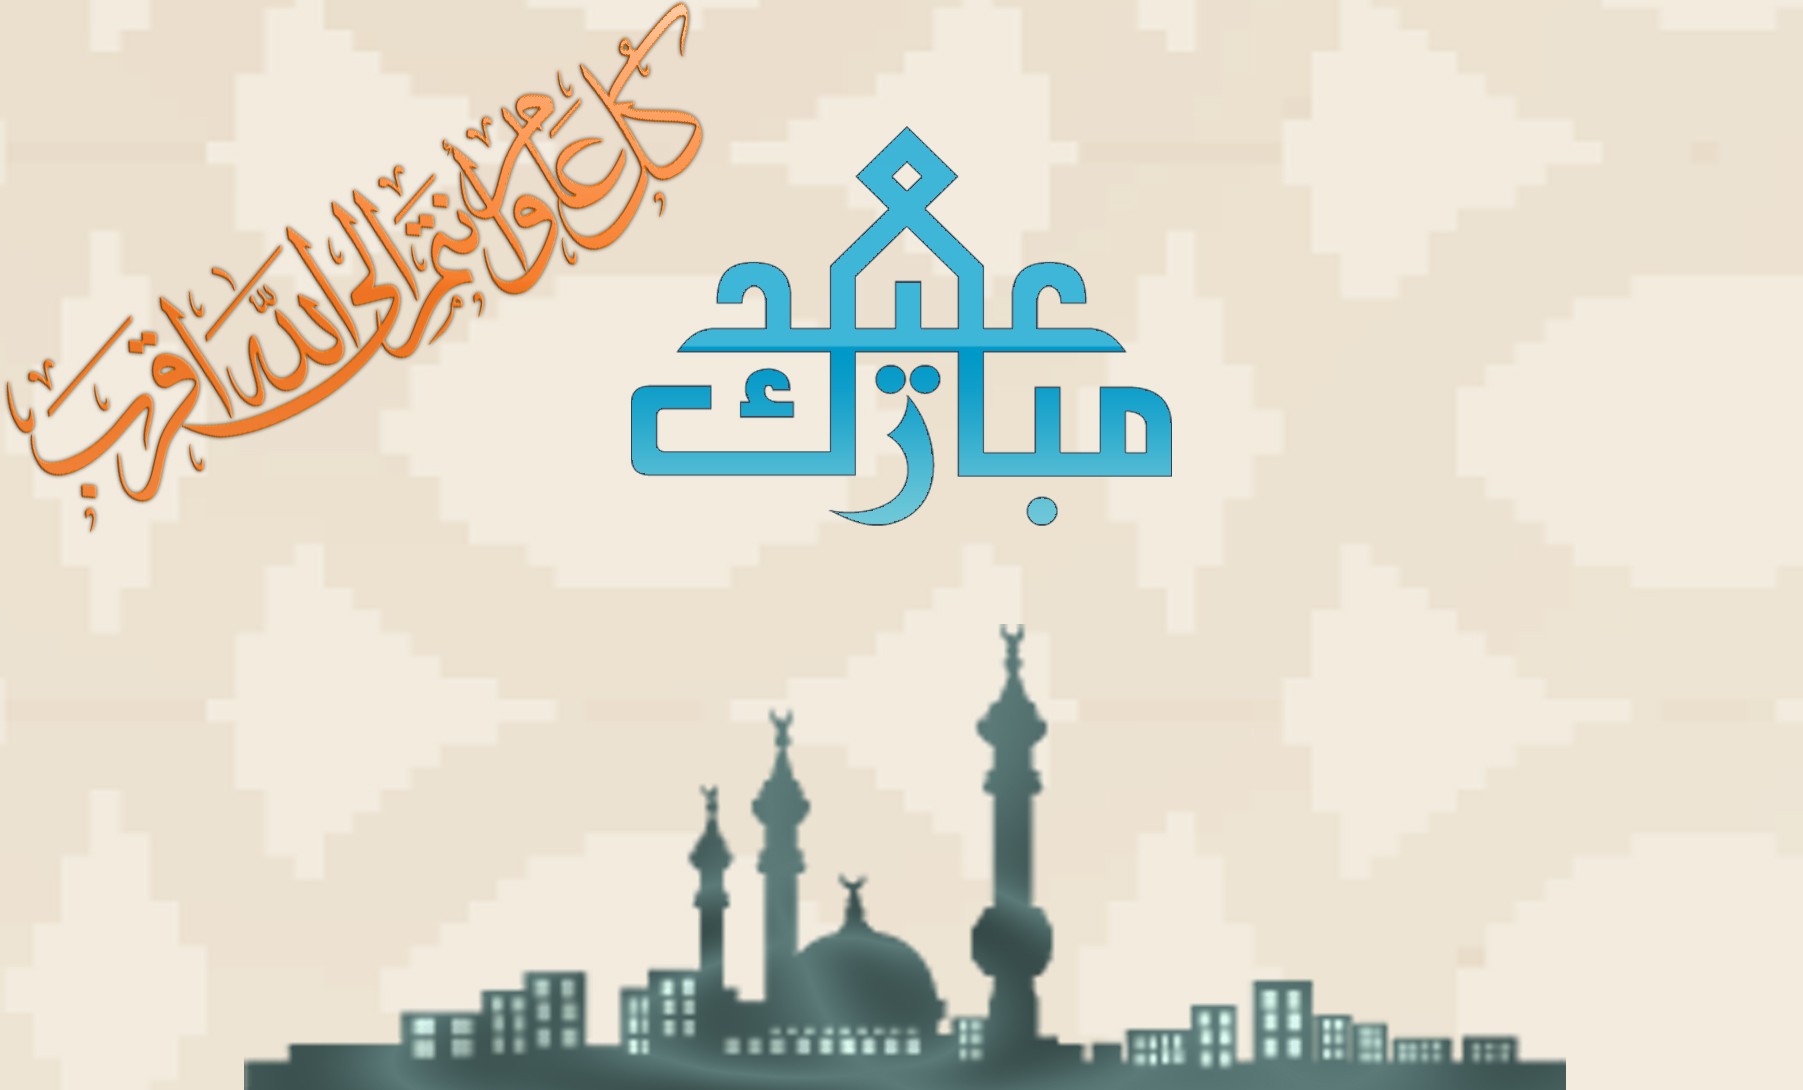 Eid Al-fitr - HD Wallpaper 